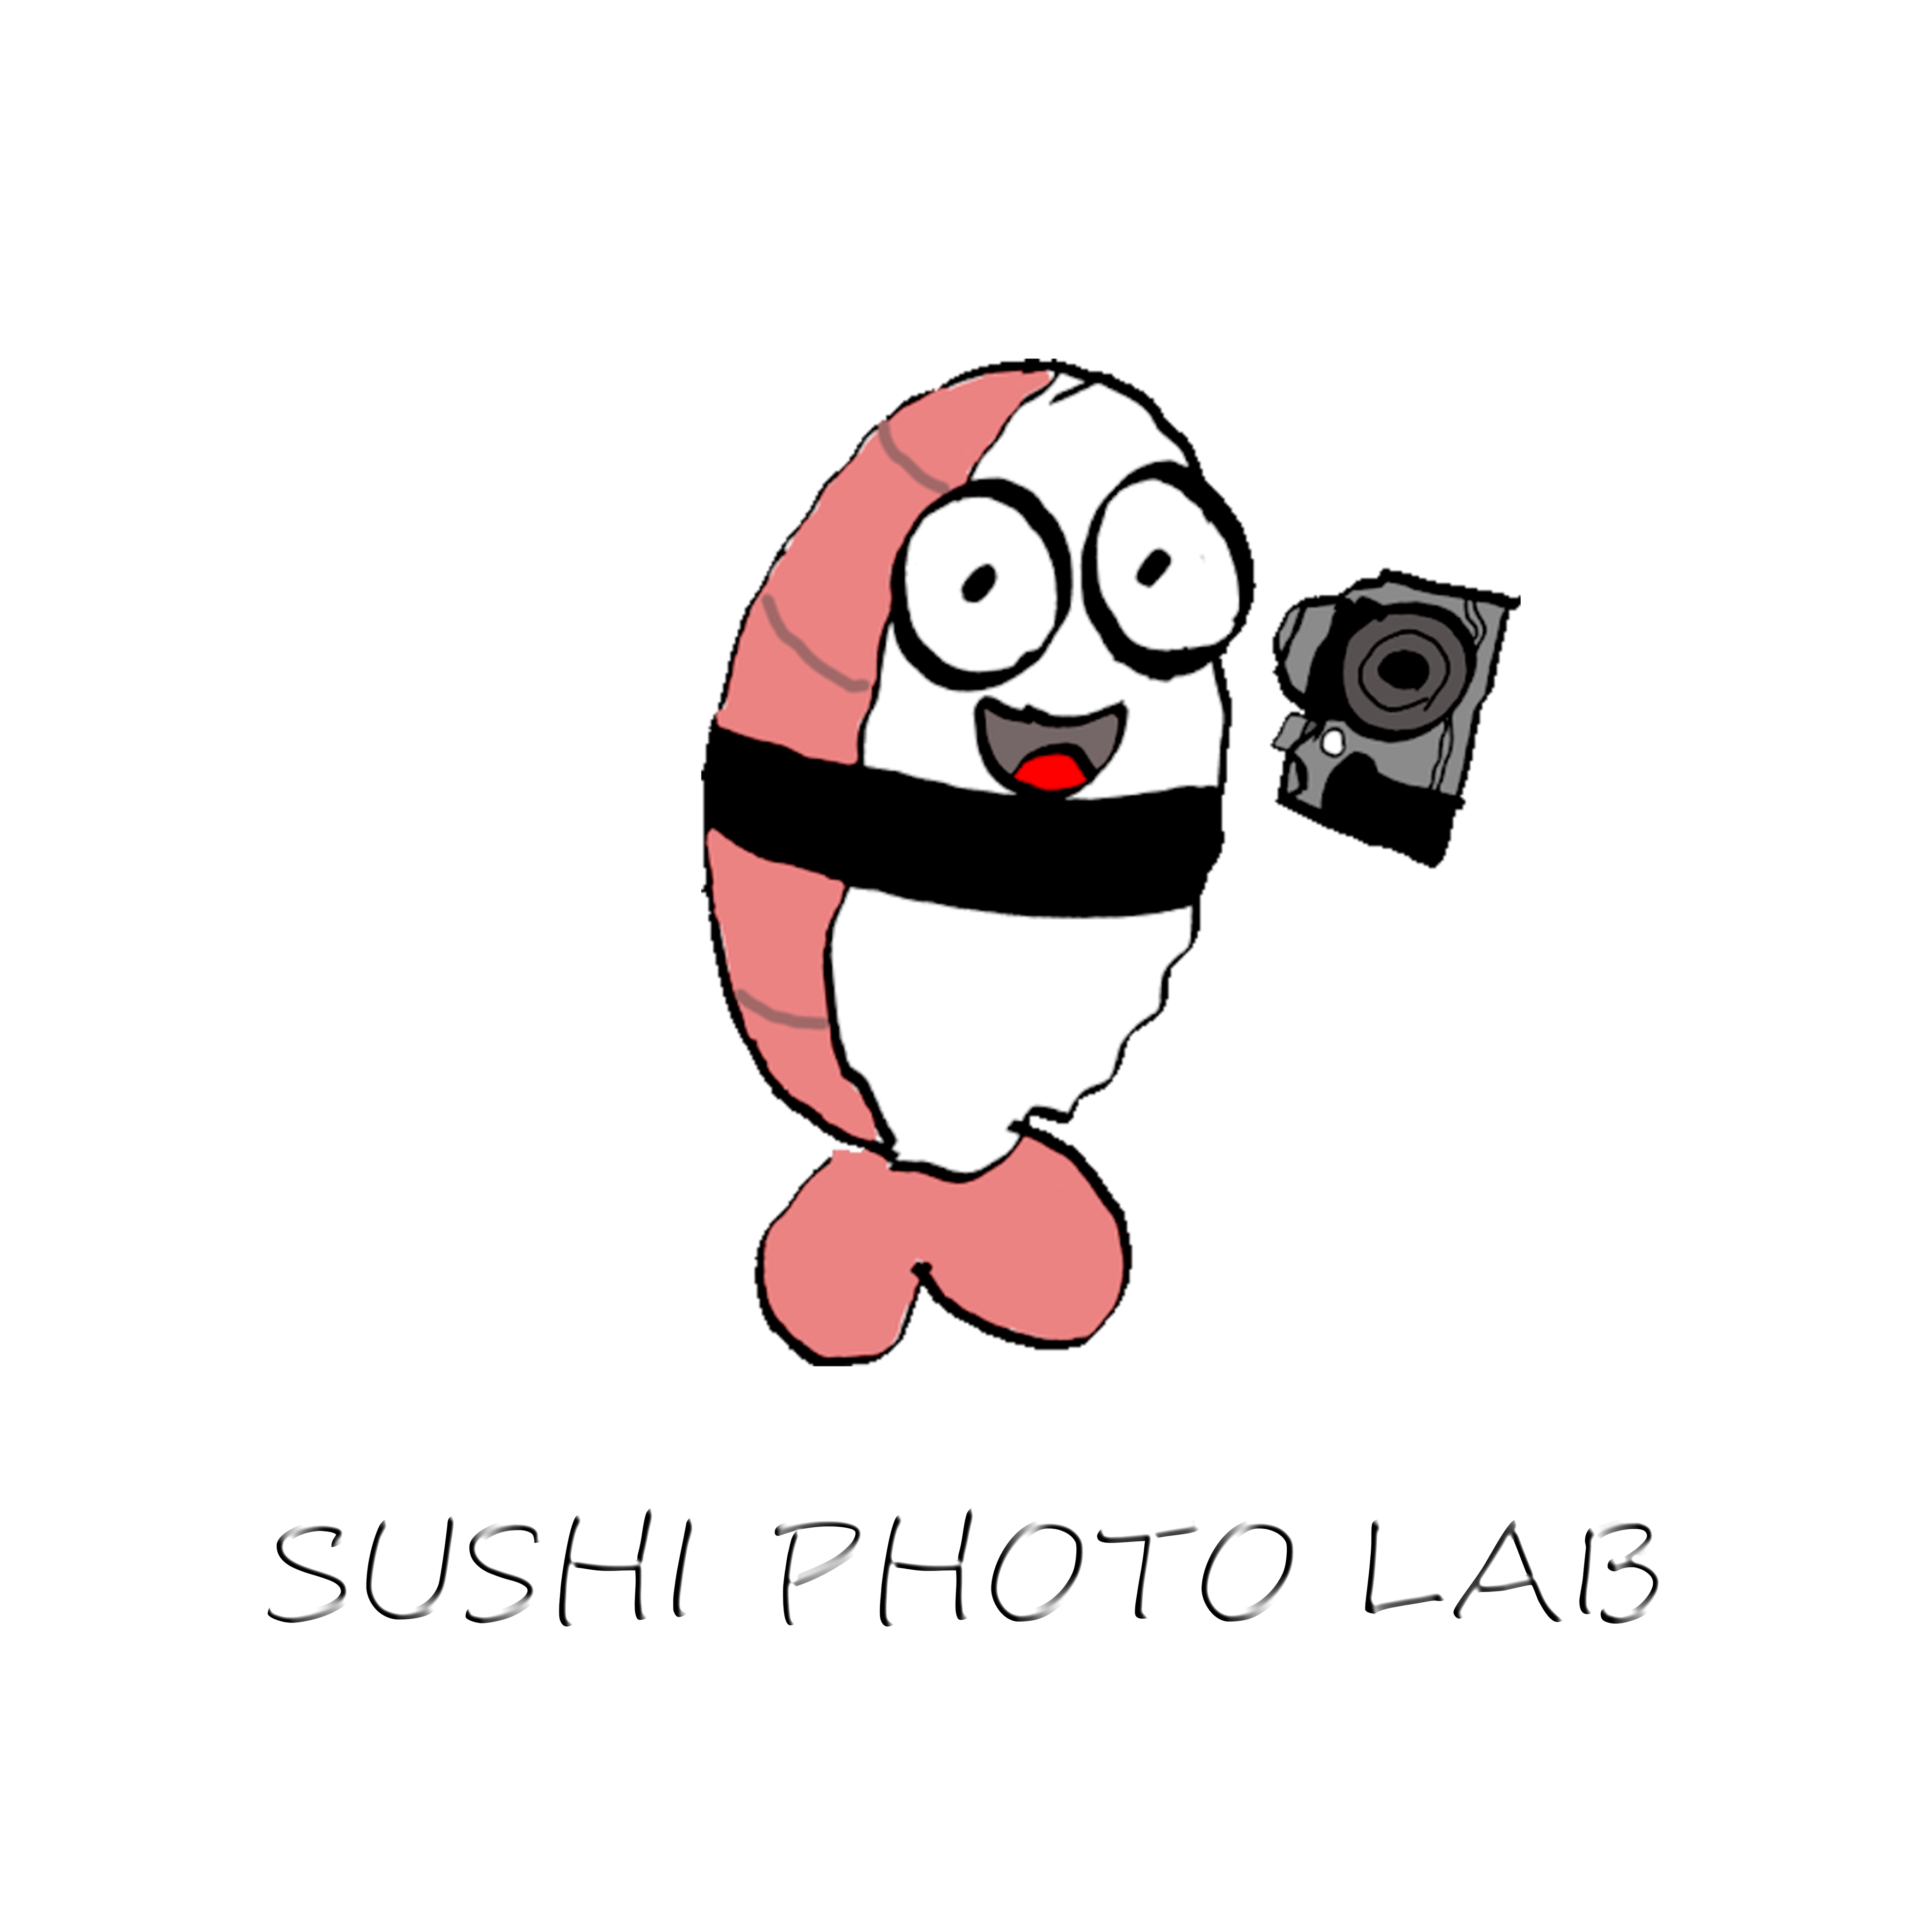 Sushi Photographie Lab